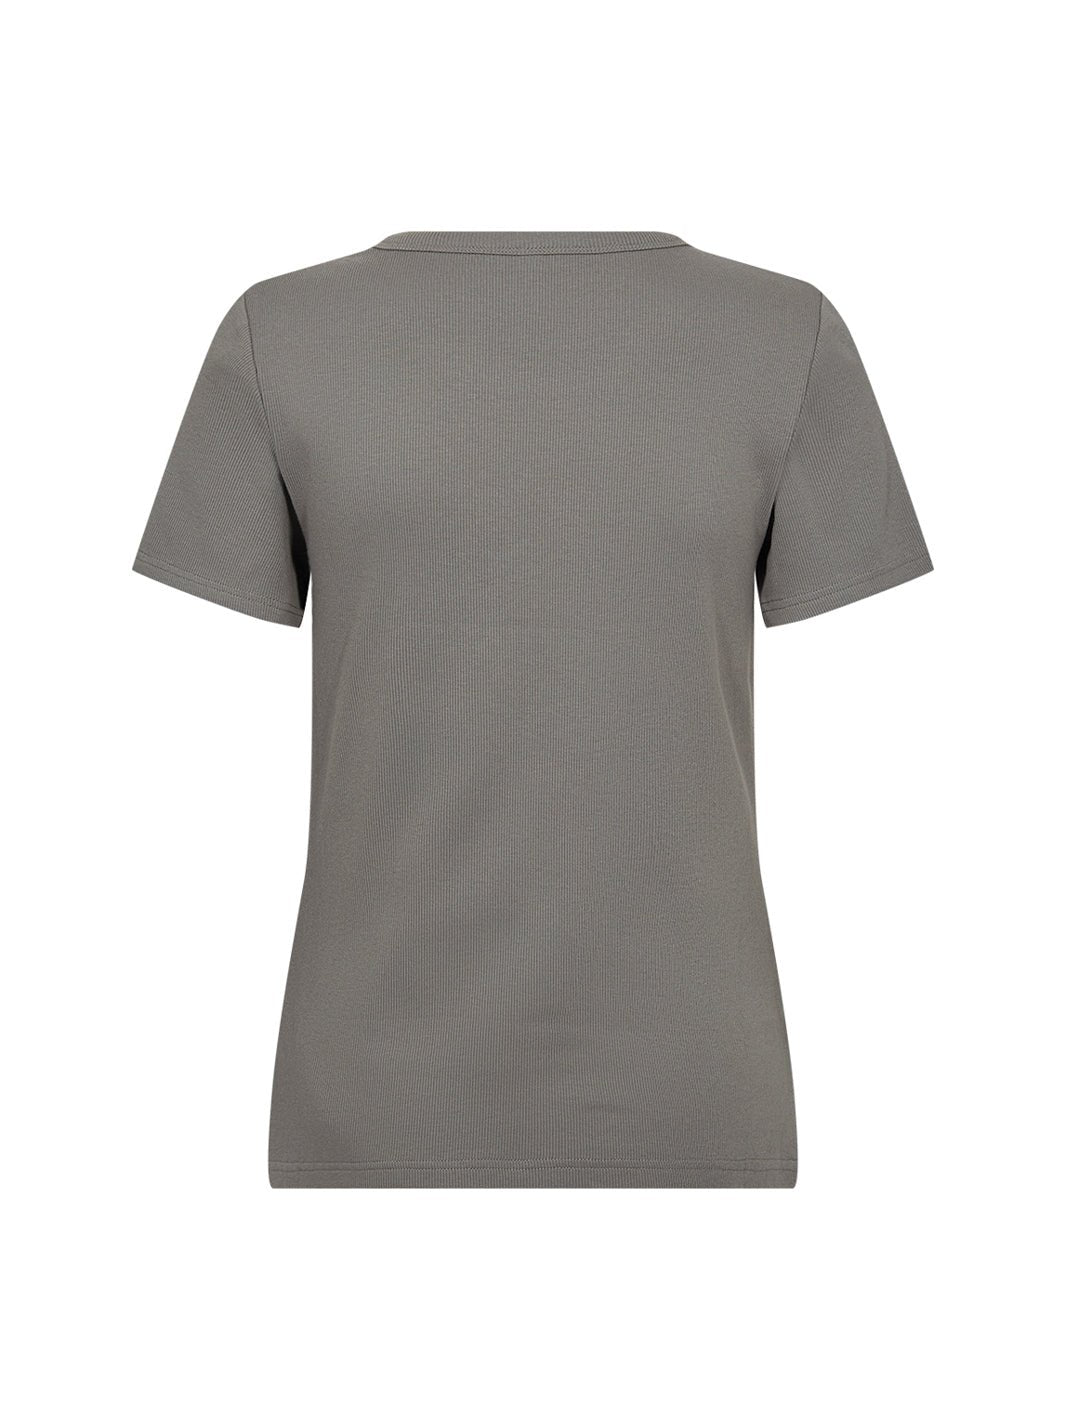 Soya Concept Mignon 3 t-shirt dusty olive - Online-Mode